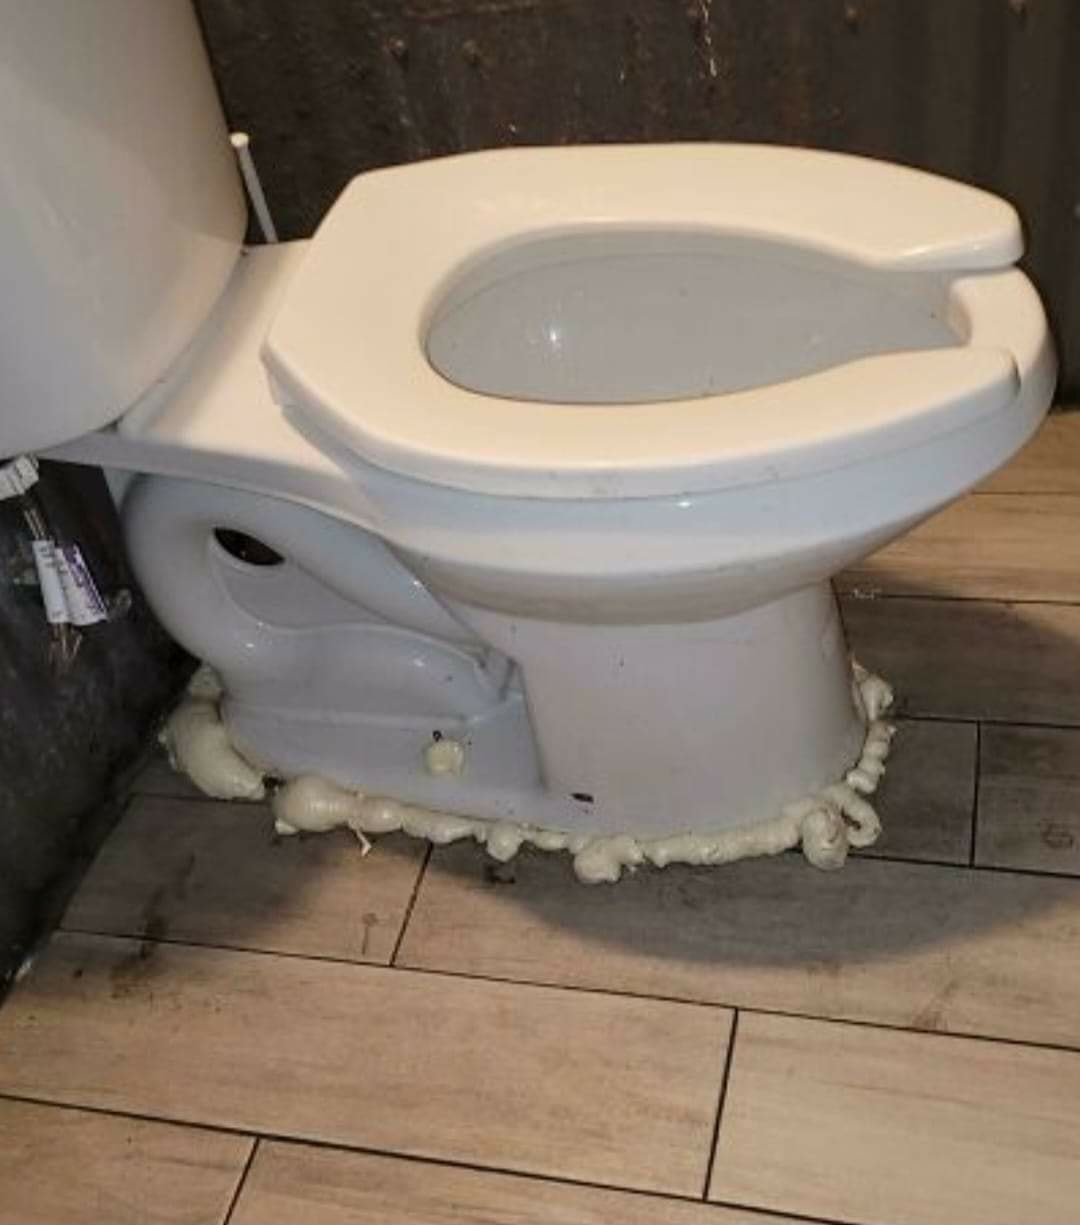 loše postavljen wc